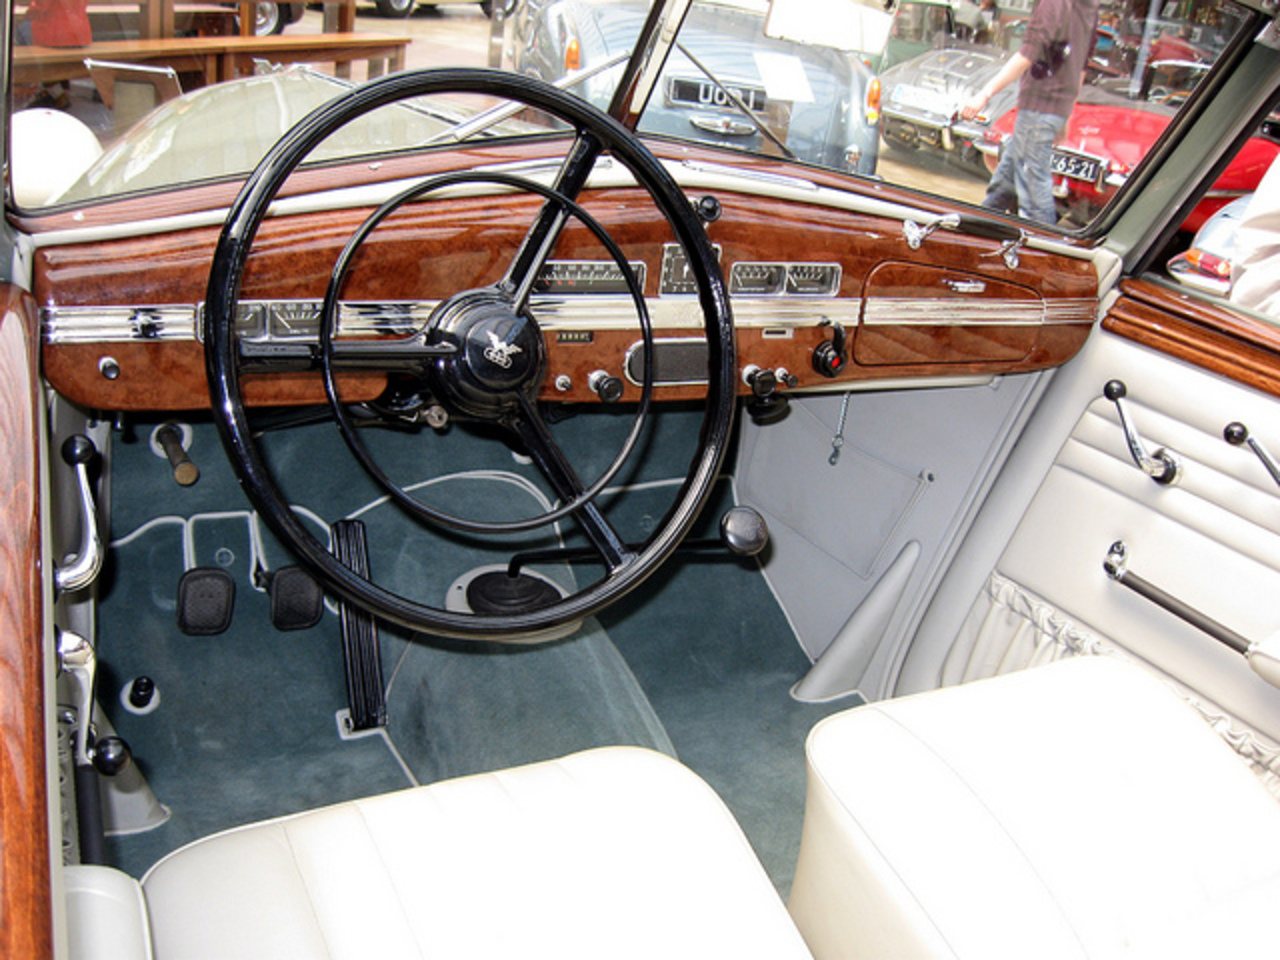 Wanderer W23 Cabrio by GlÃ¤ser 1939 | Flickr - Photo Sharing!